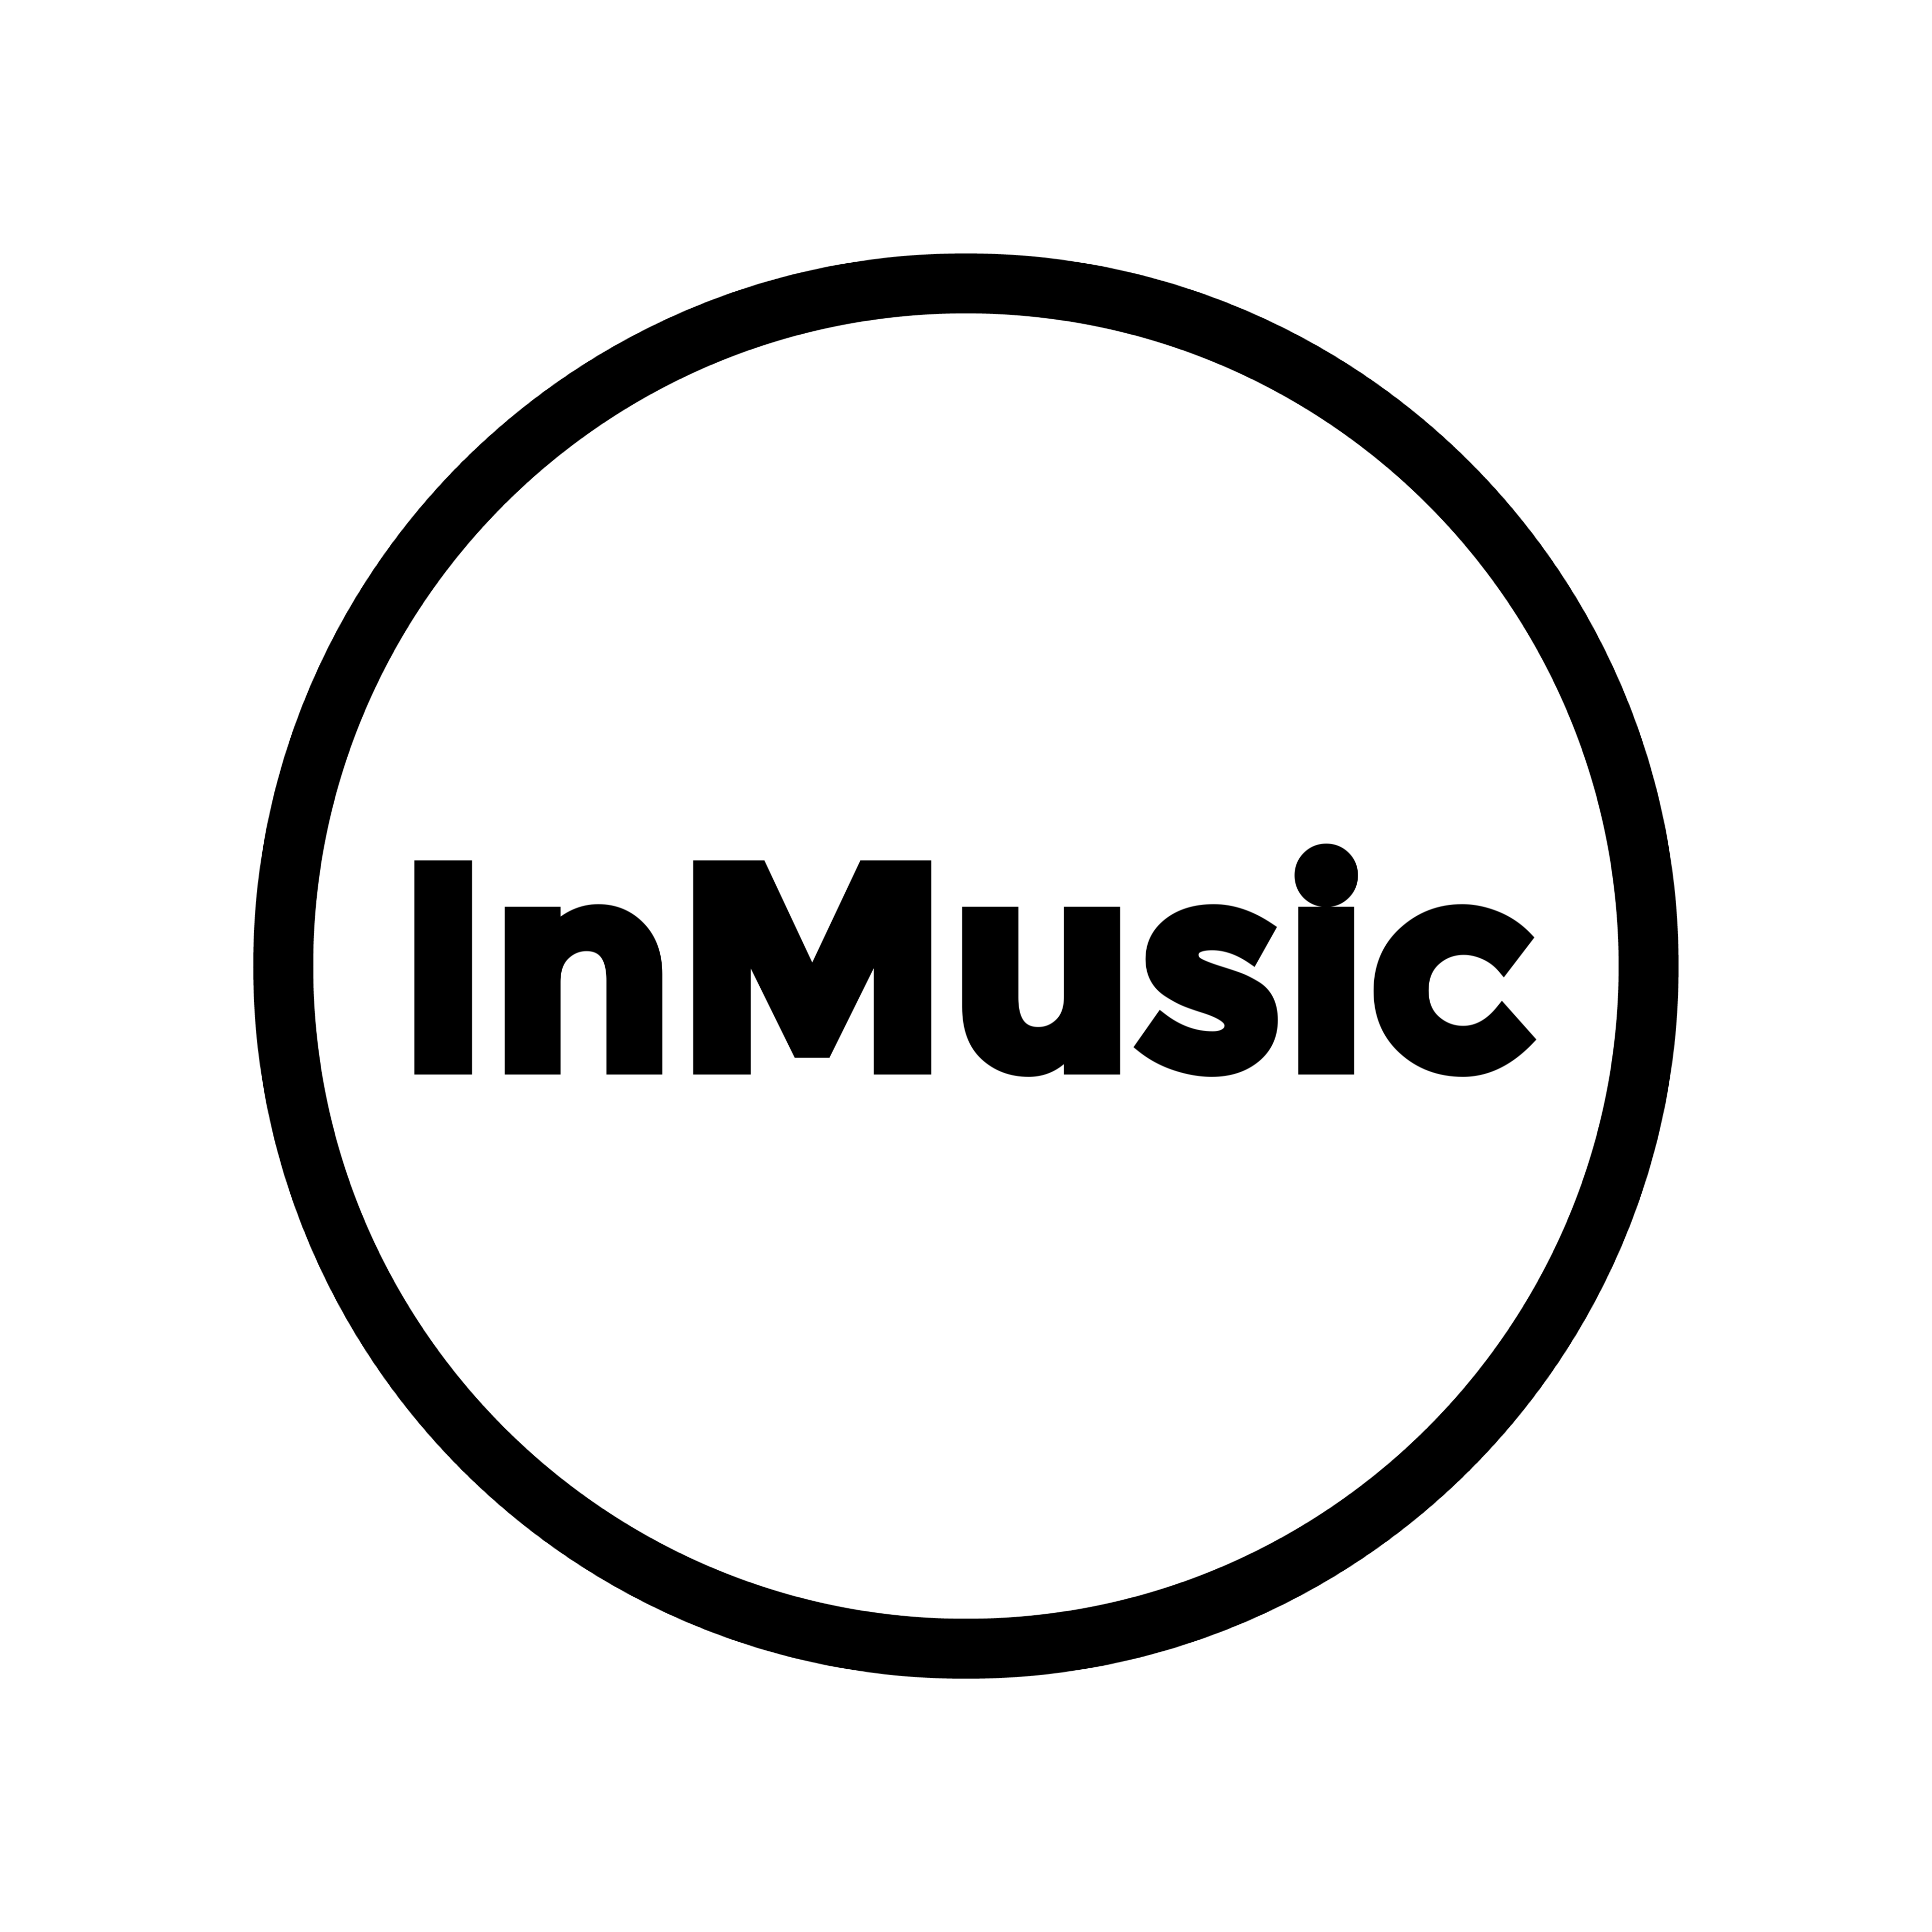 InMusic